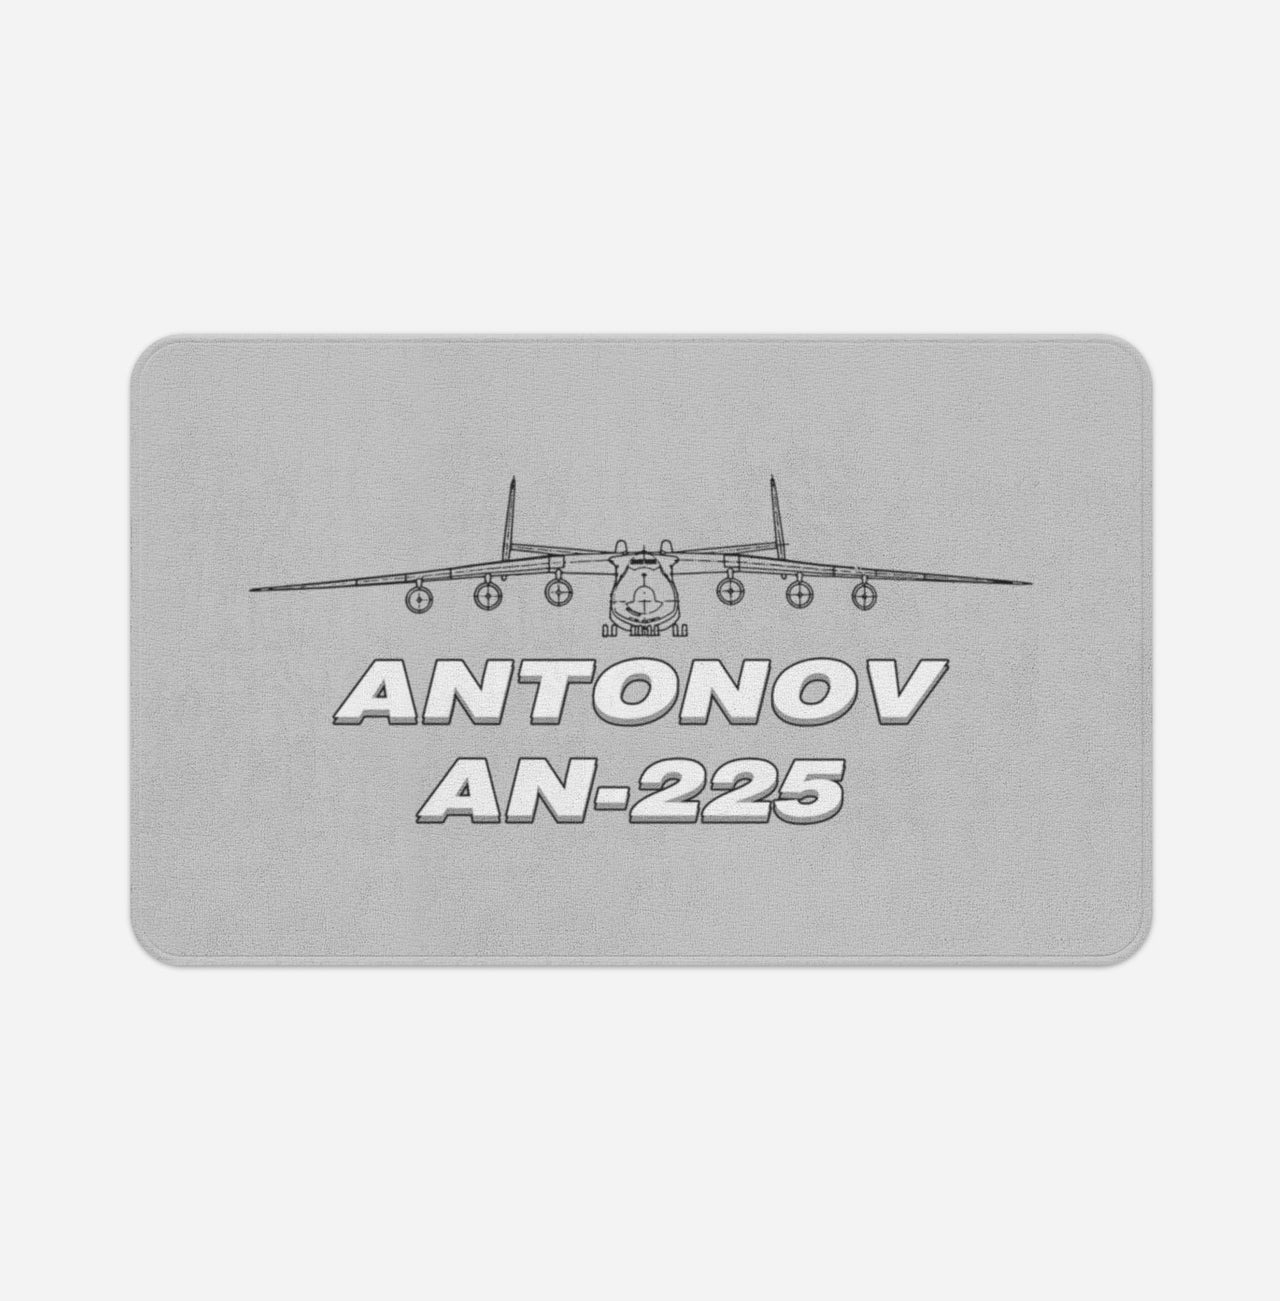 Antonov AN-225 (26) Designed Bath Mats